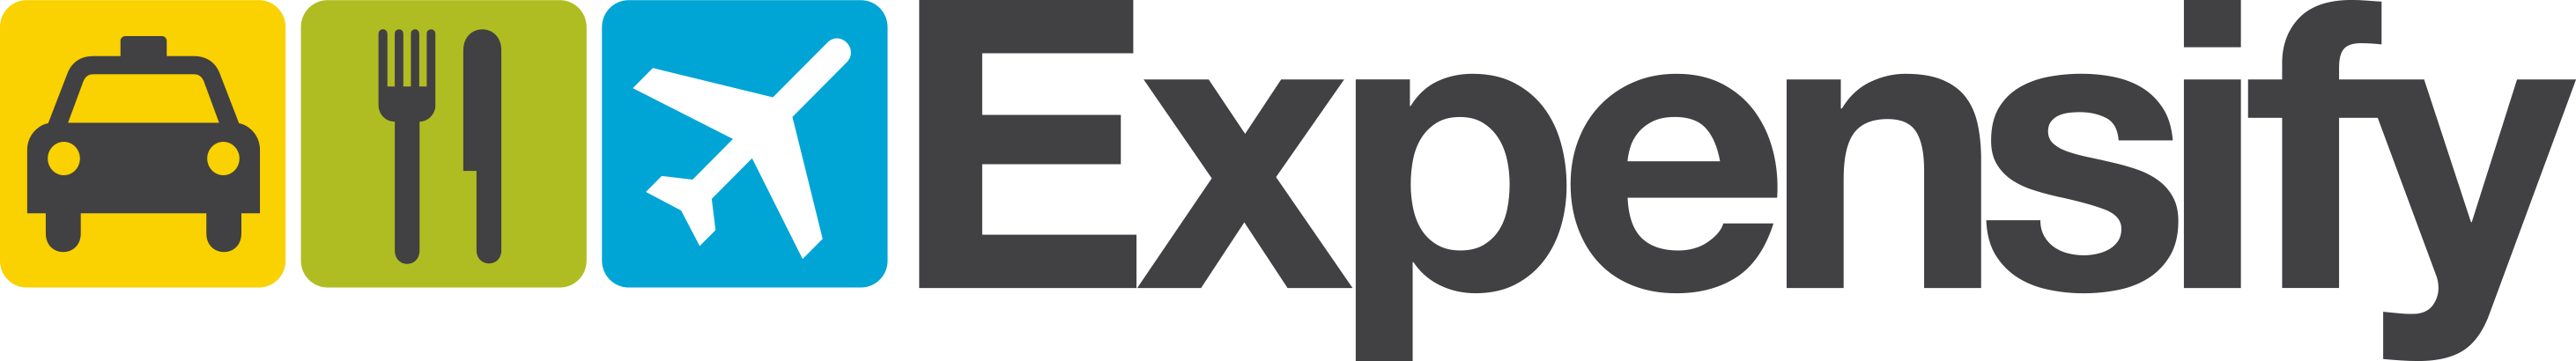 Expensify Logo